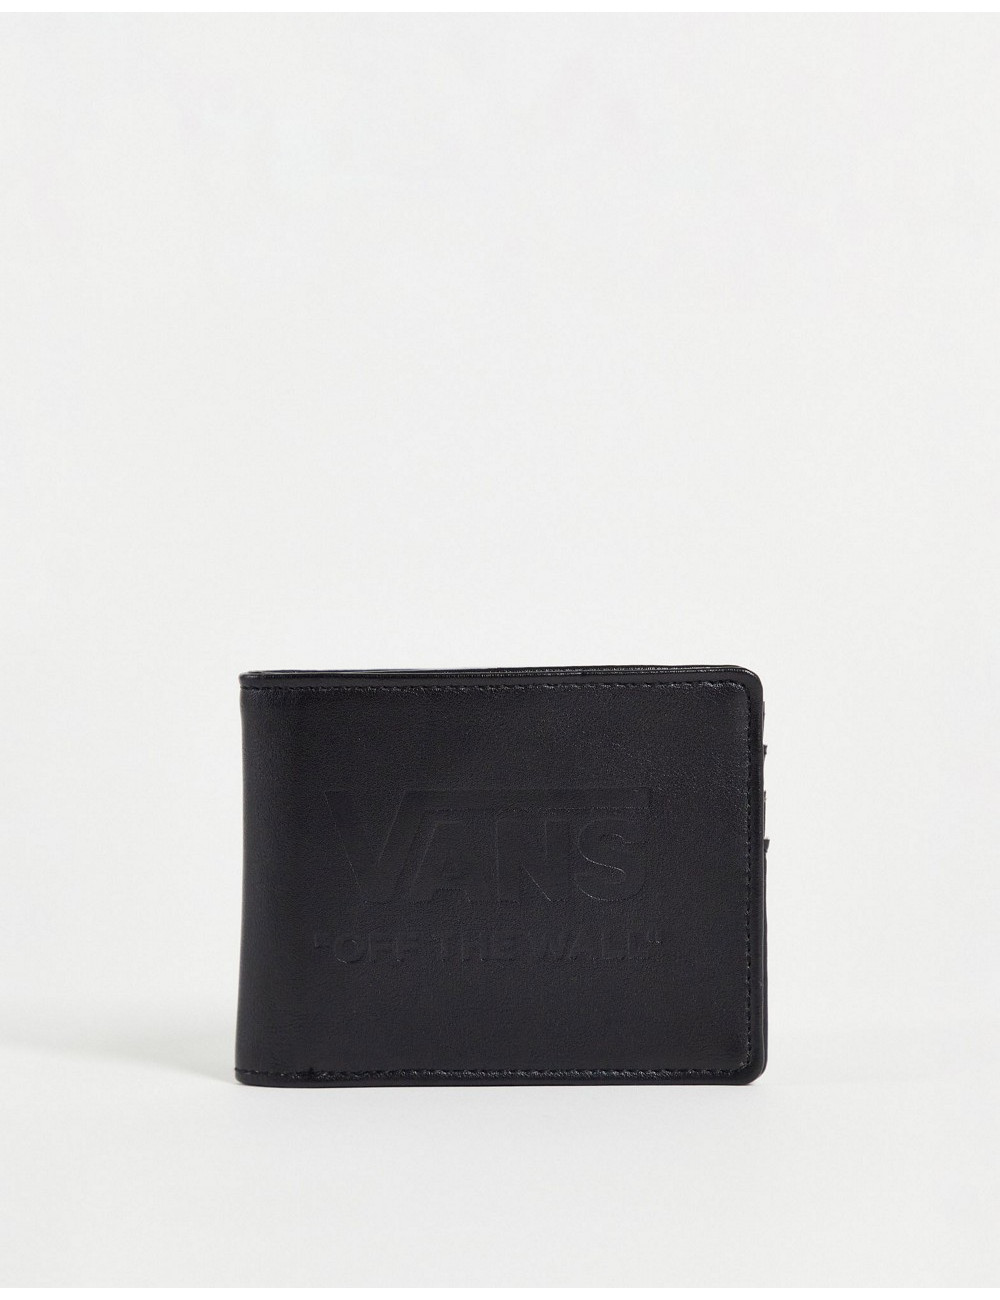 Vans Logo wallet in black